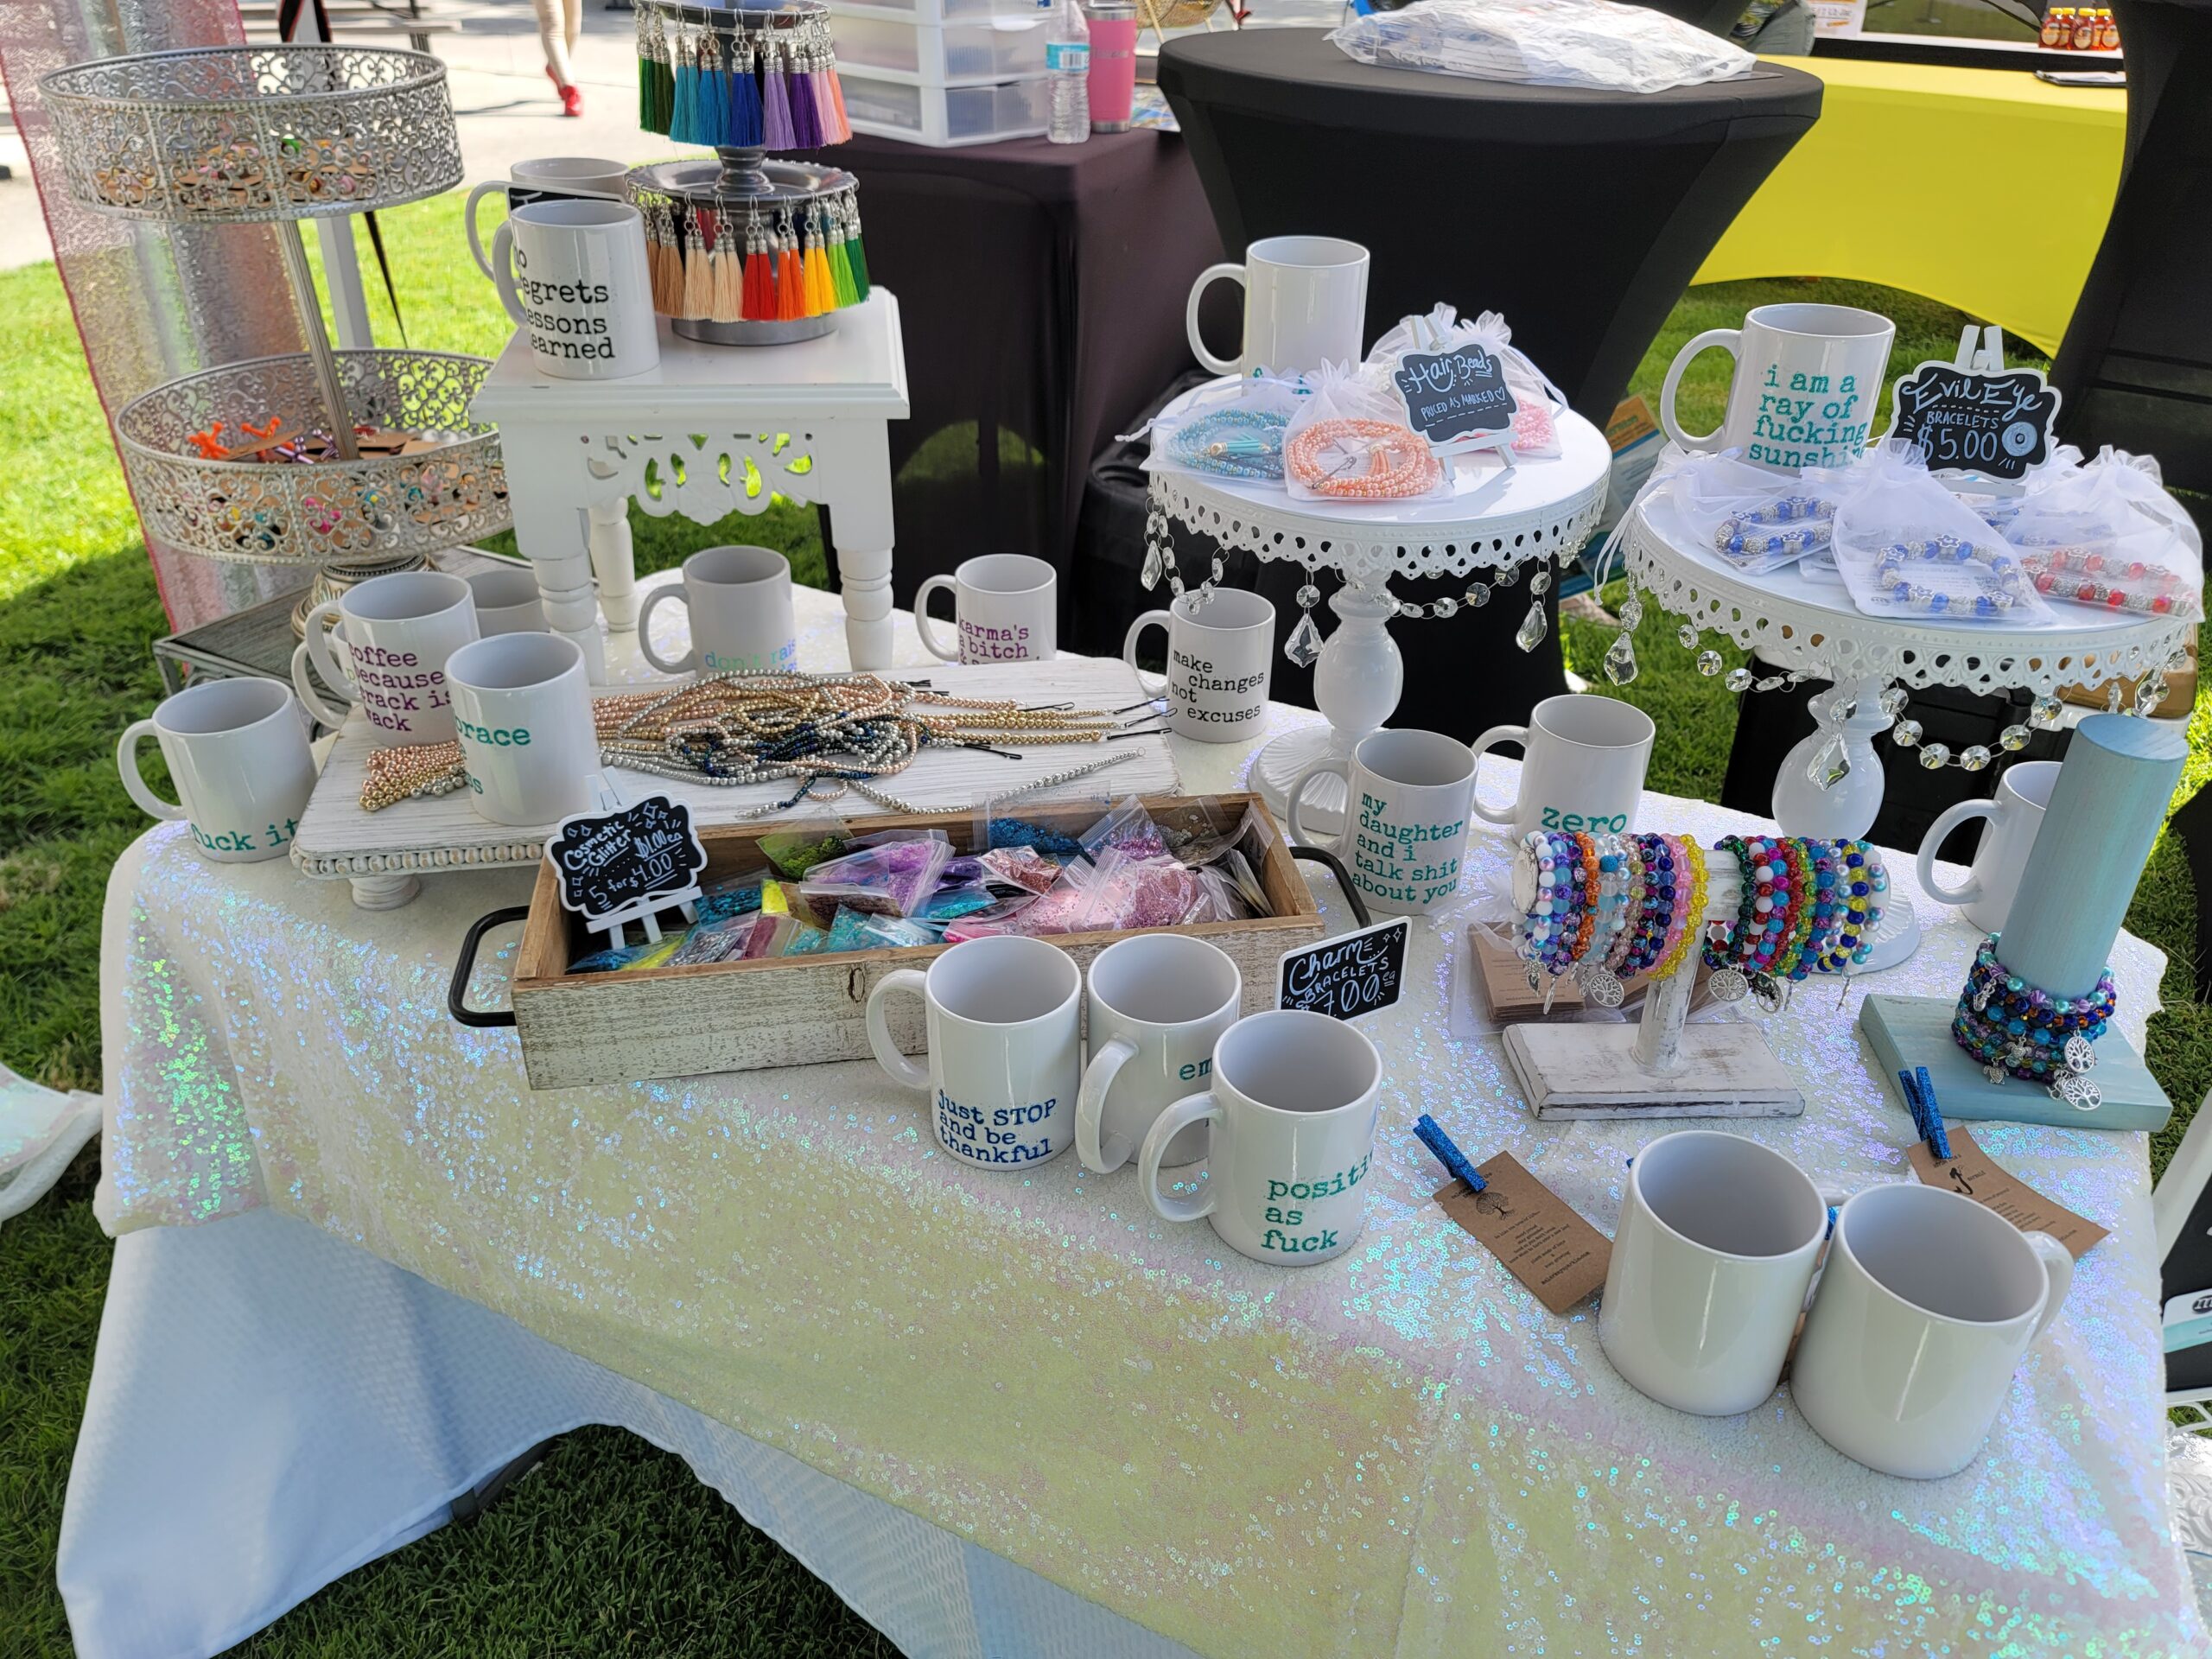 malarkey market - right table set up - malarkey's first vendor fair exposed